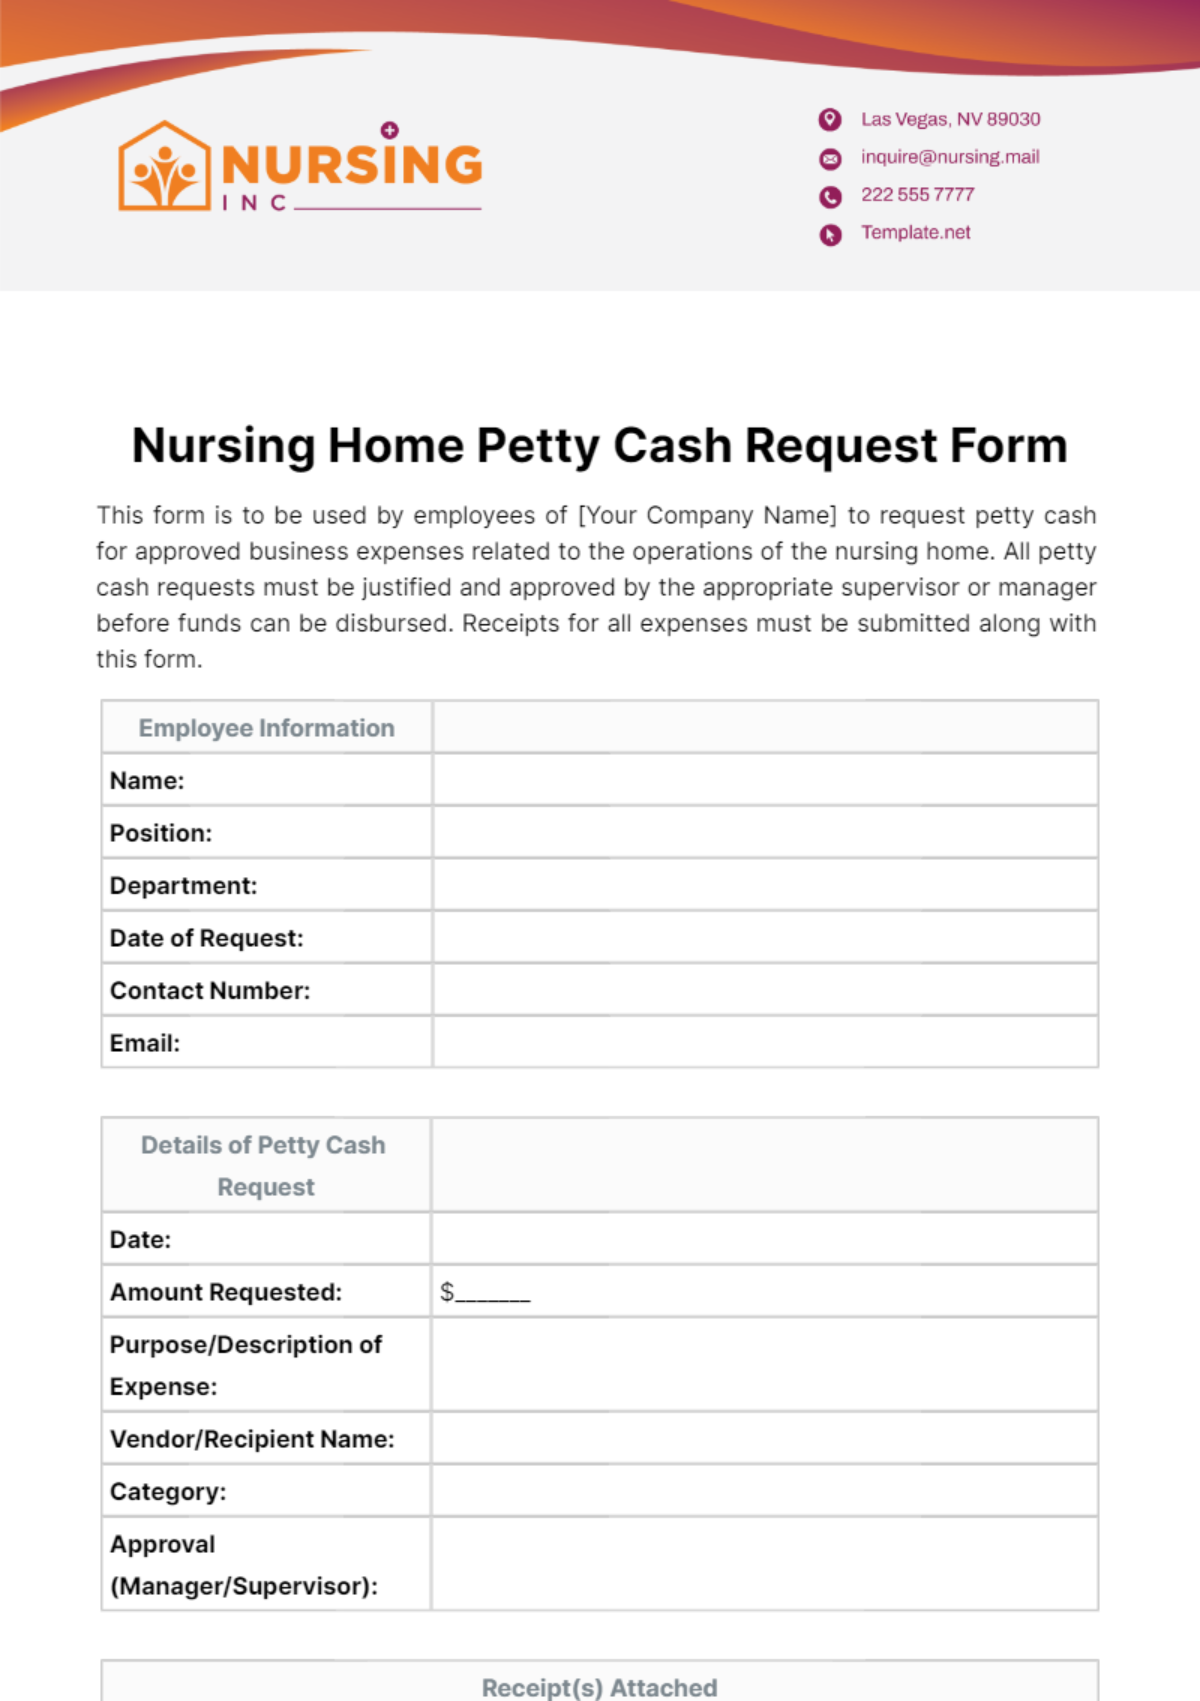 Free Nursing Home Petty Cash Request Form Template